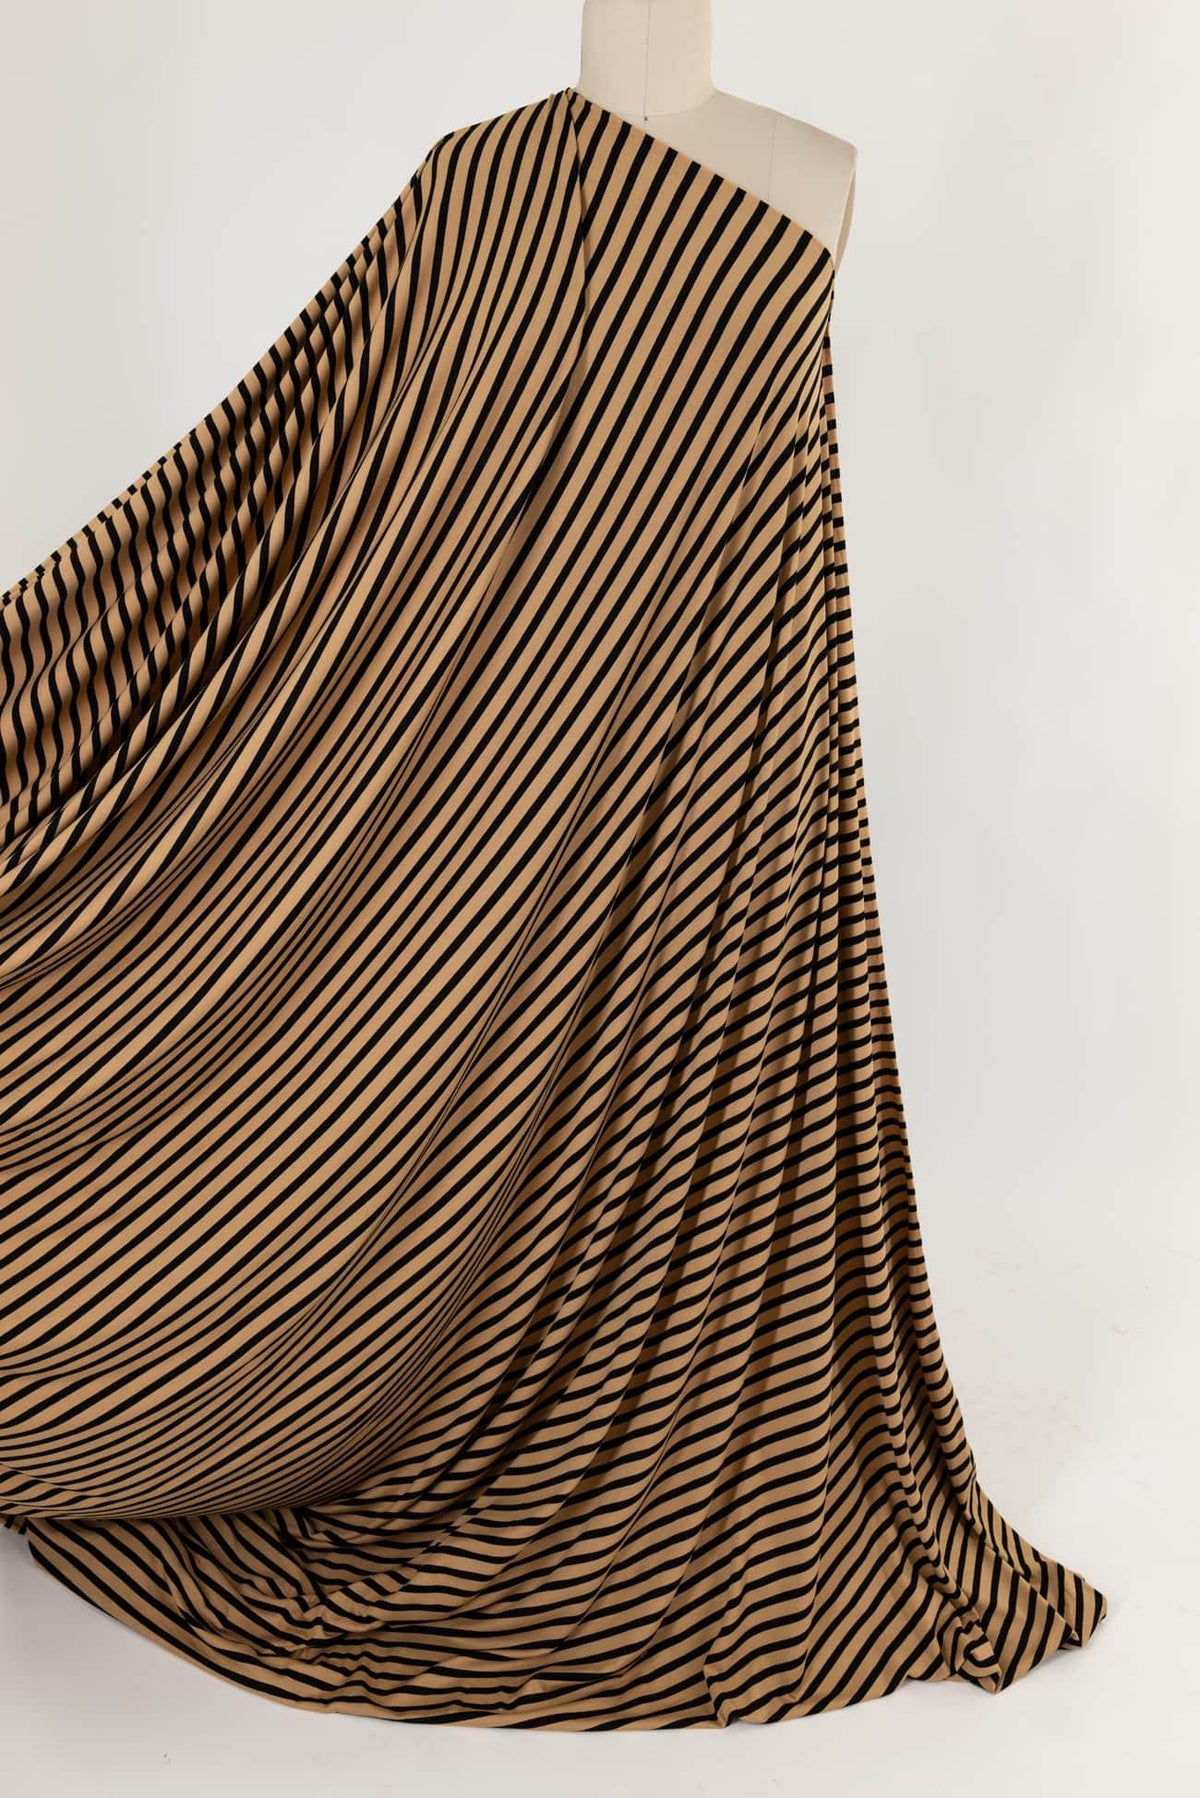 Cappuccino Stripe USA Knit - Marcy Tilton Fabrics